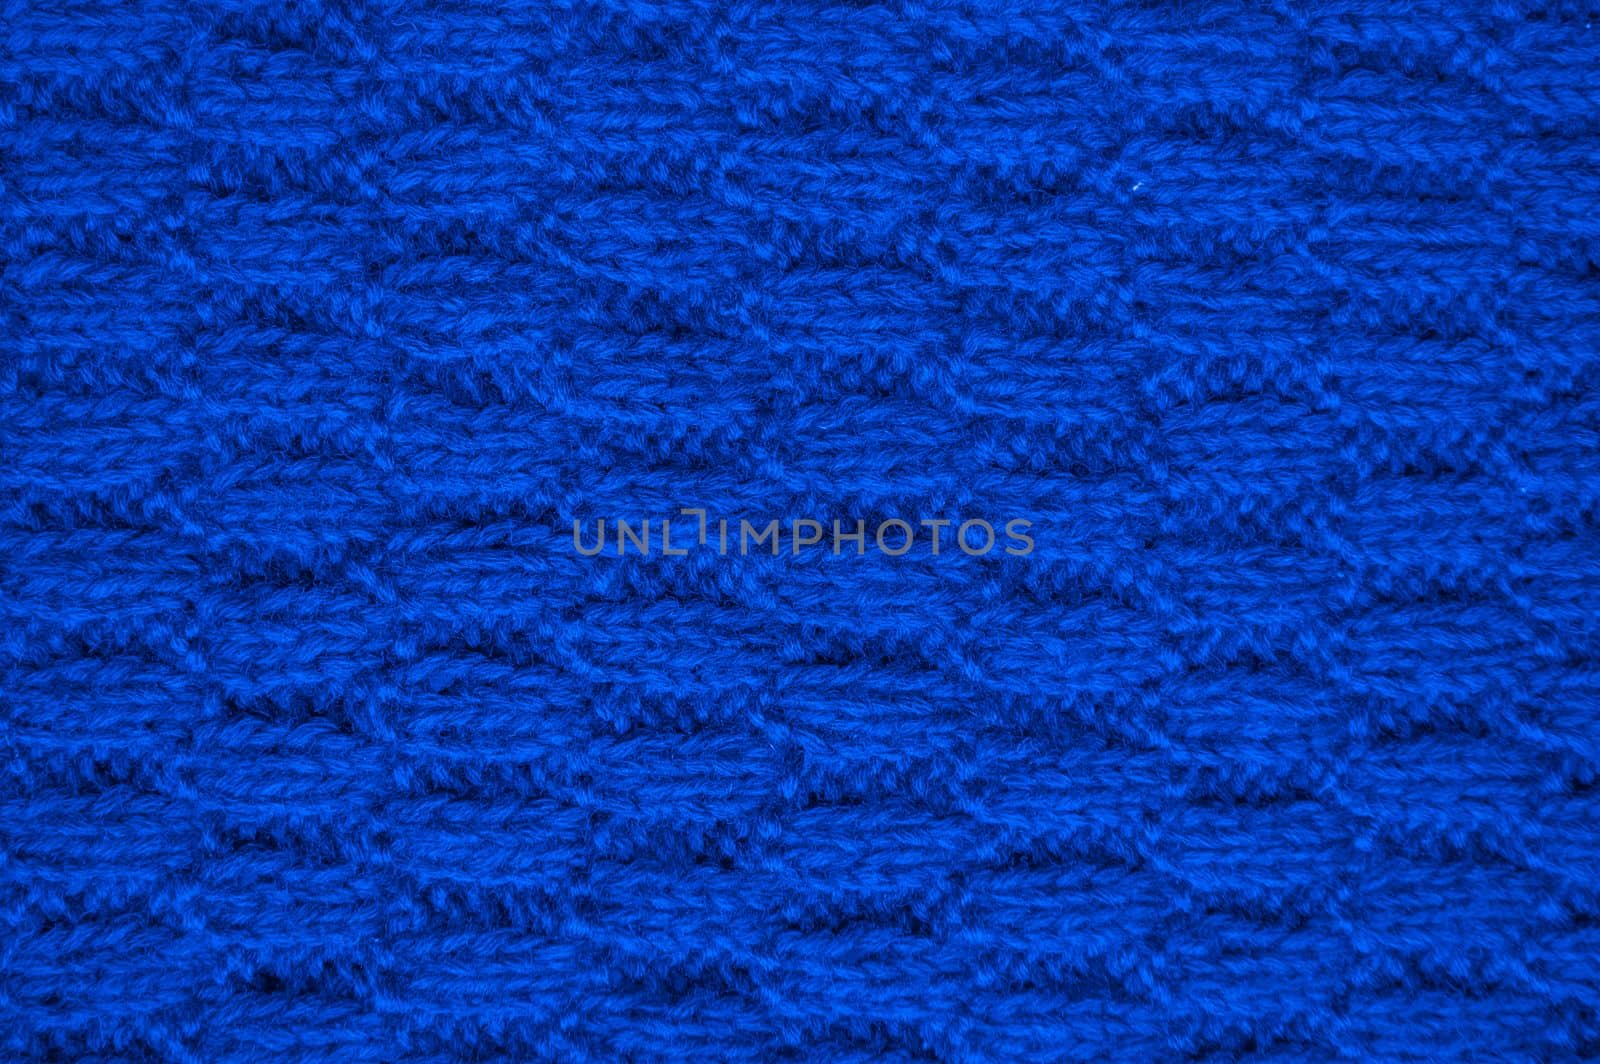 Linen Knitted Background. Vintage Wool Texture. Handmade Holiday Design. Woolen Knitting Texture. Soft Thread. Scandinavian Winter Print. Weave Canvas Material. Knitted Texture.